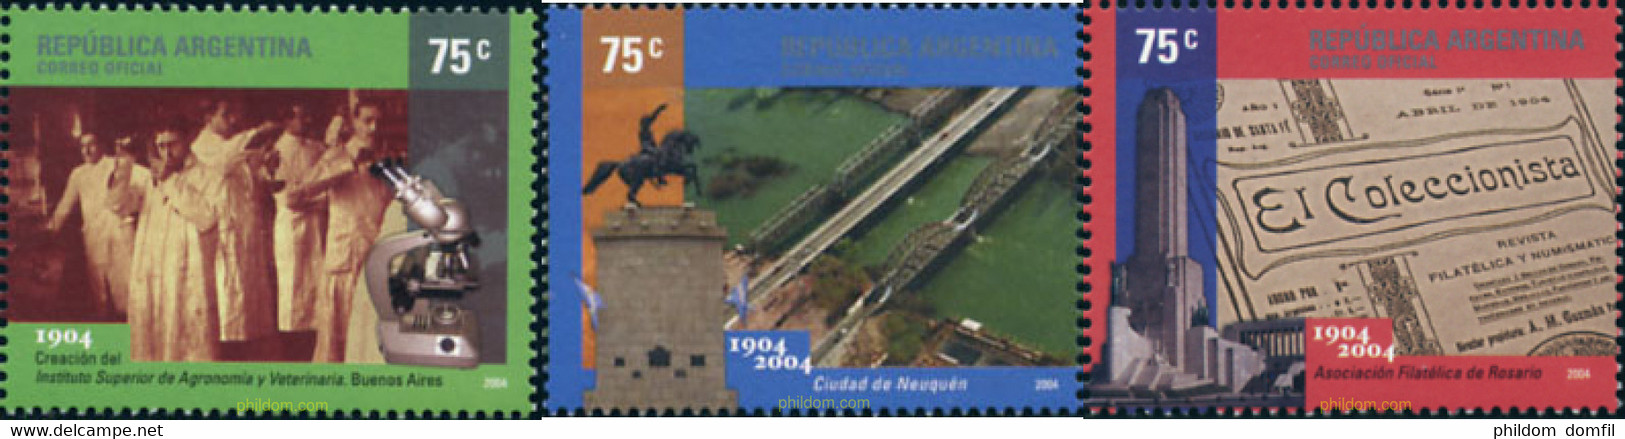 169115 MNH ARGENTINA 2004 INSTITUTO DE AGRONOMIA Y VETERINARIA - Used Stamps